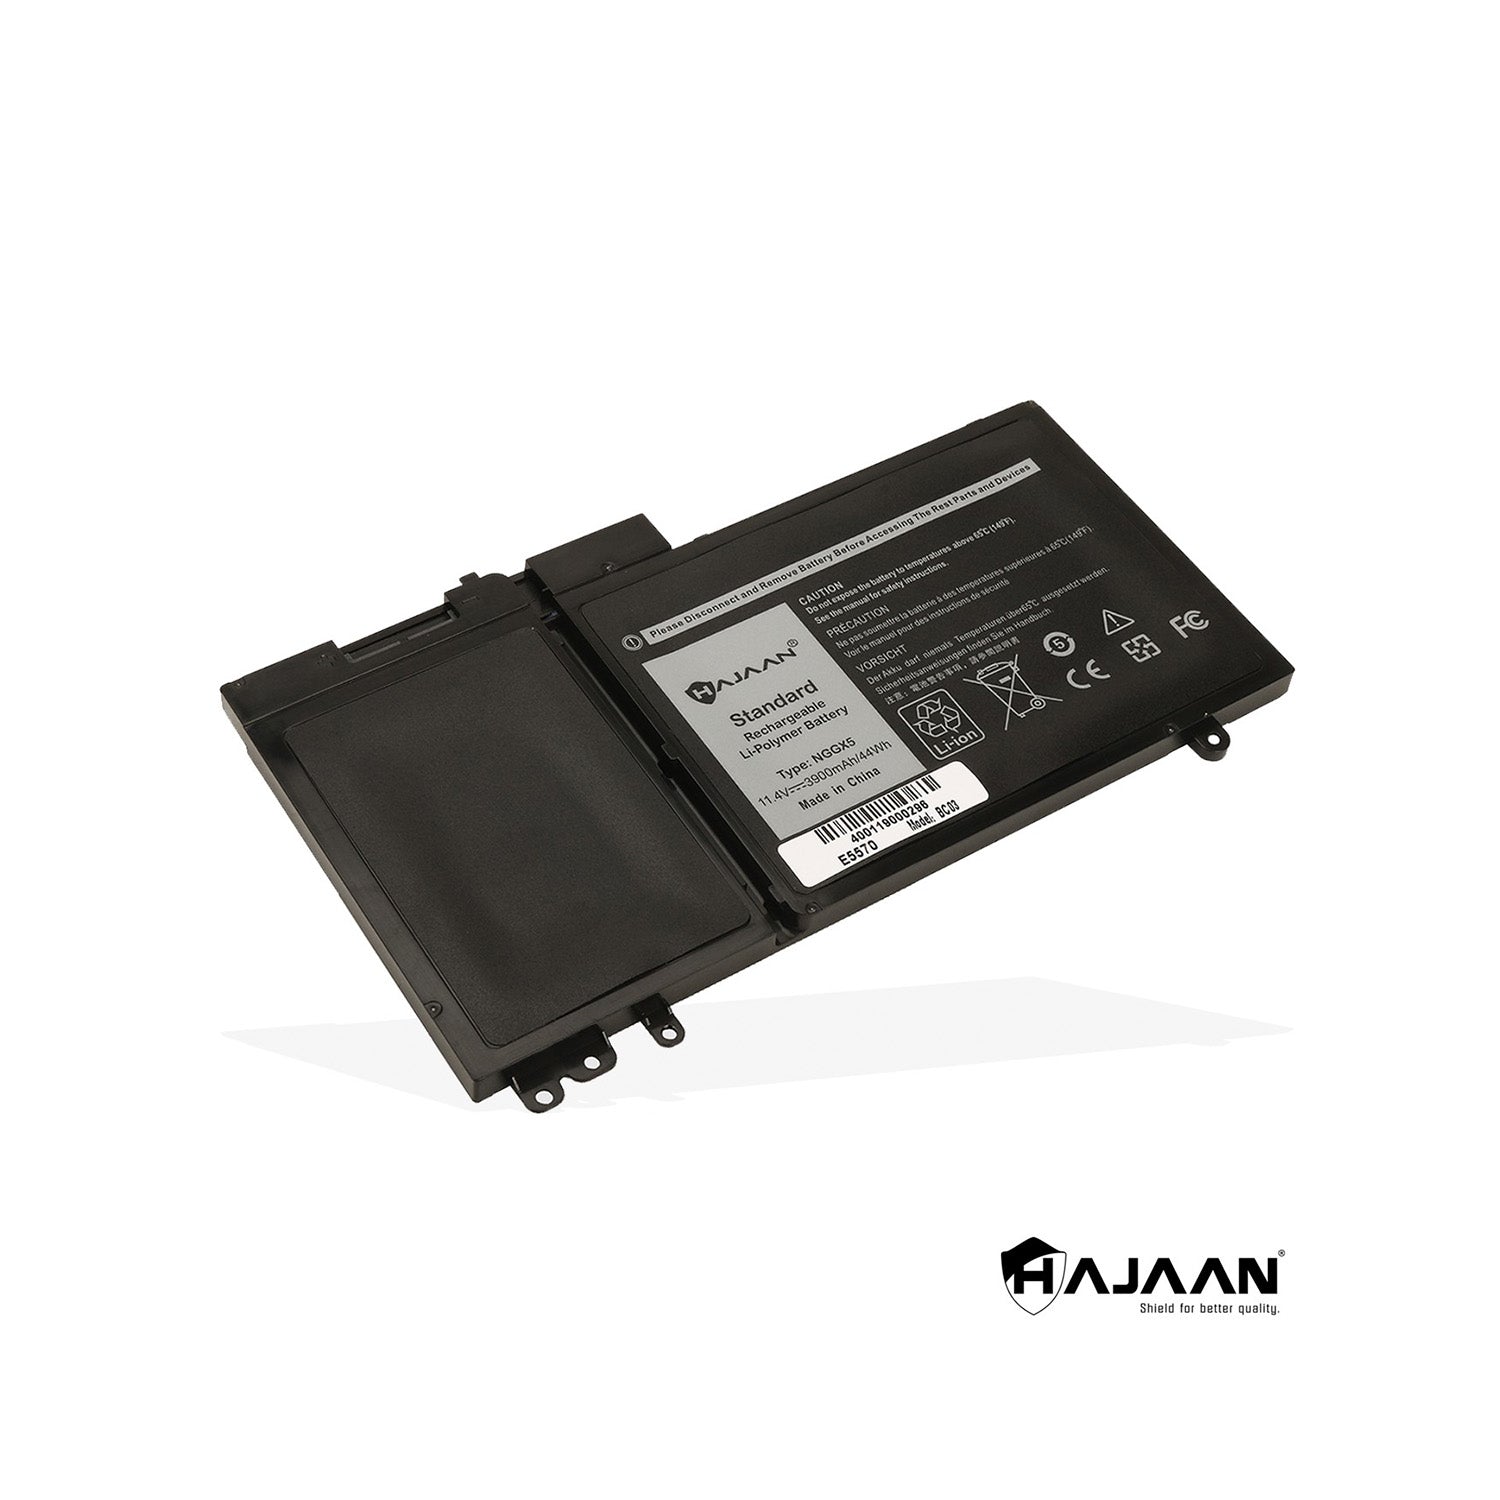 HAJAAN New Laptop battery for Dell Latitude E5570, E5470, M3510, E5270, NGGX5 Li-polymer(3900mAh/44WAH, 3- Cells, 11.4V) 1 Year Warranty